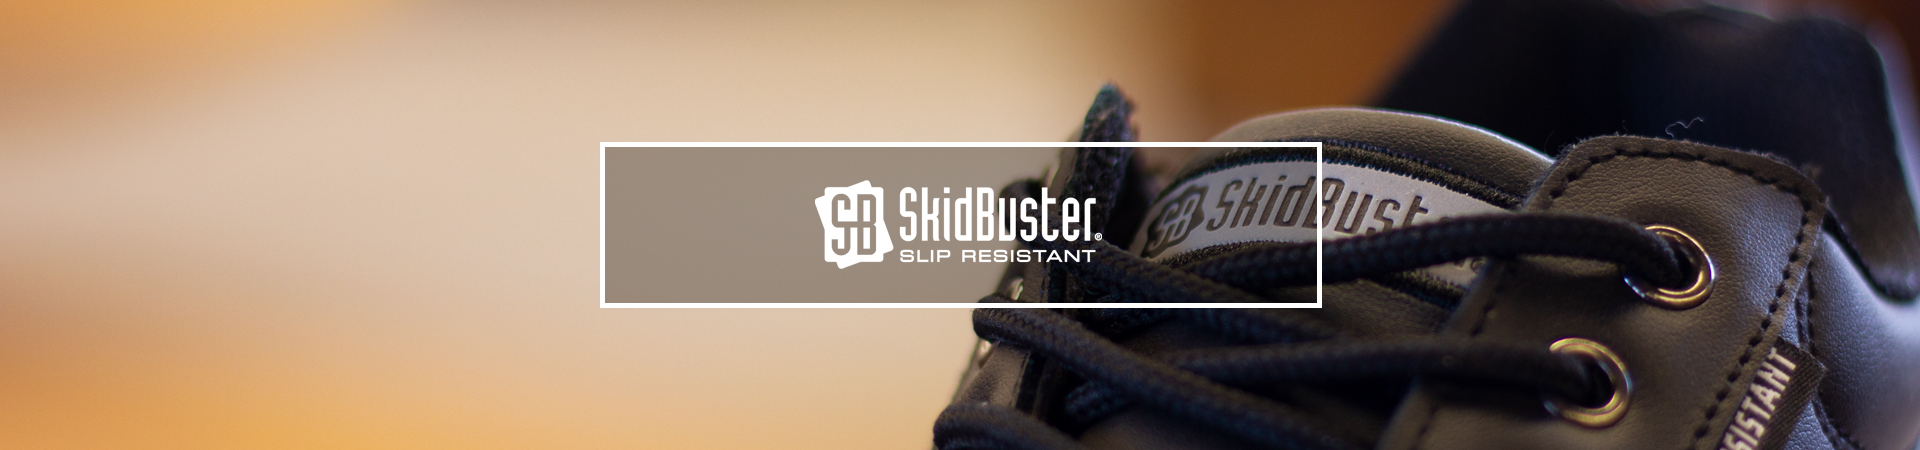 skidbuster shoes